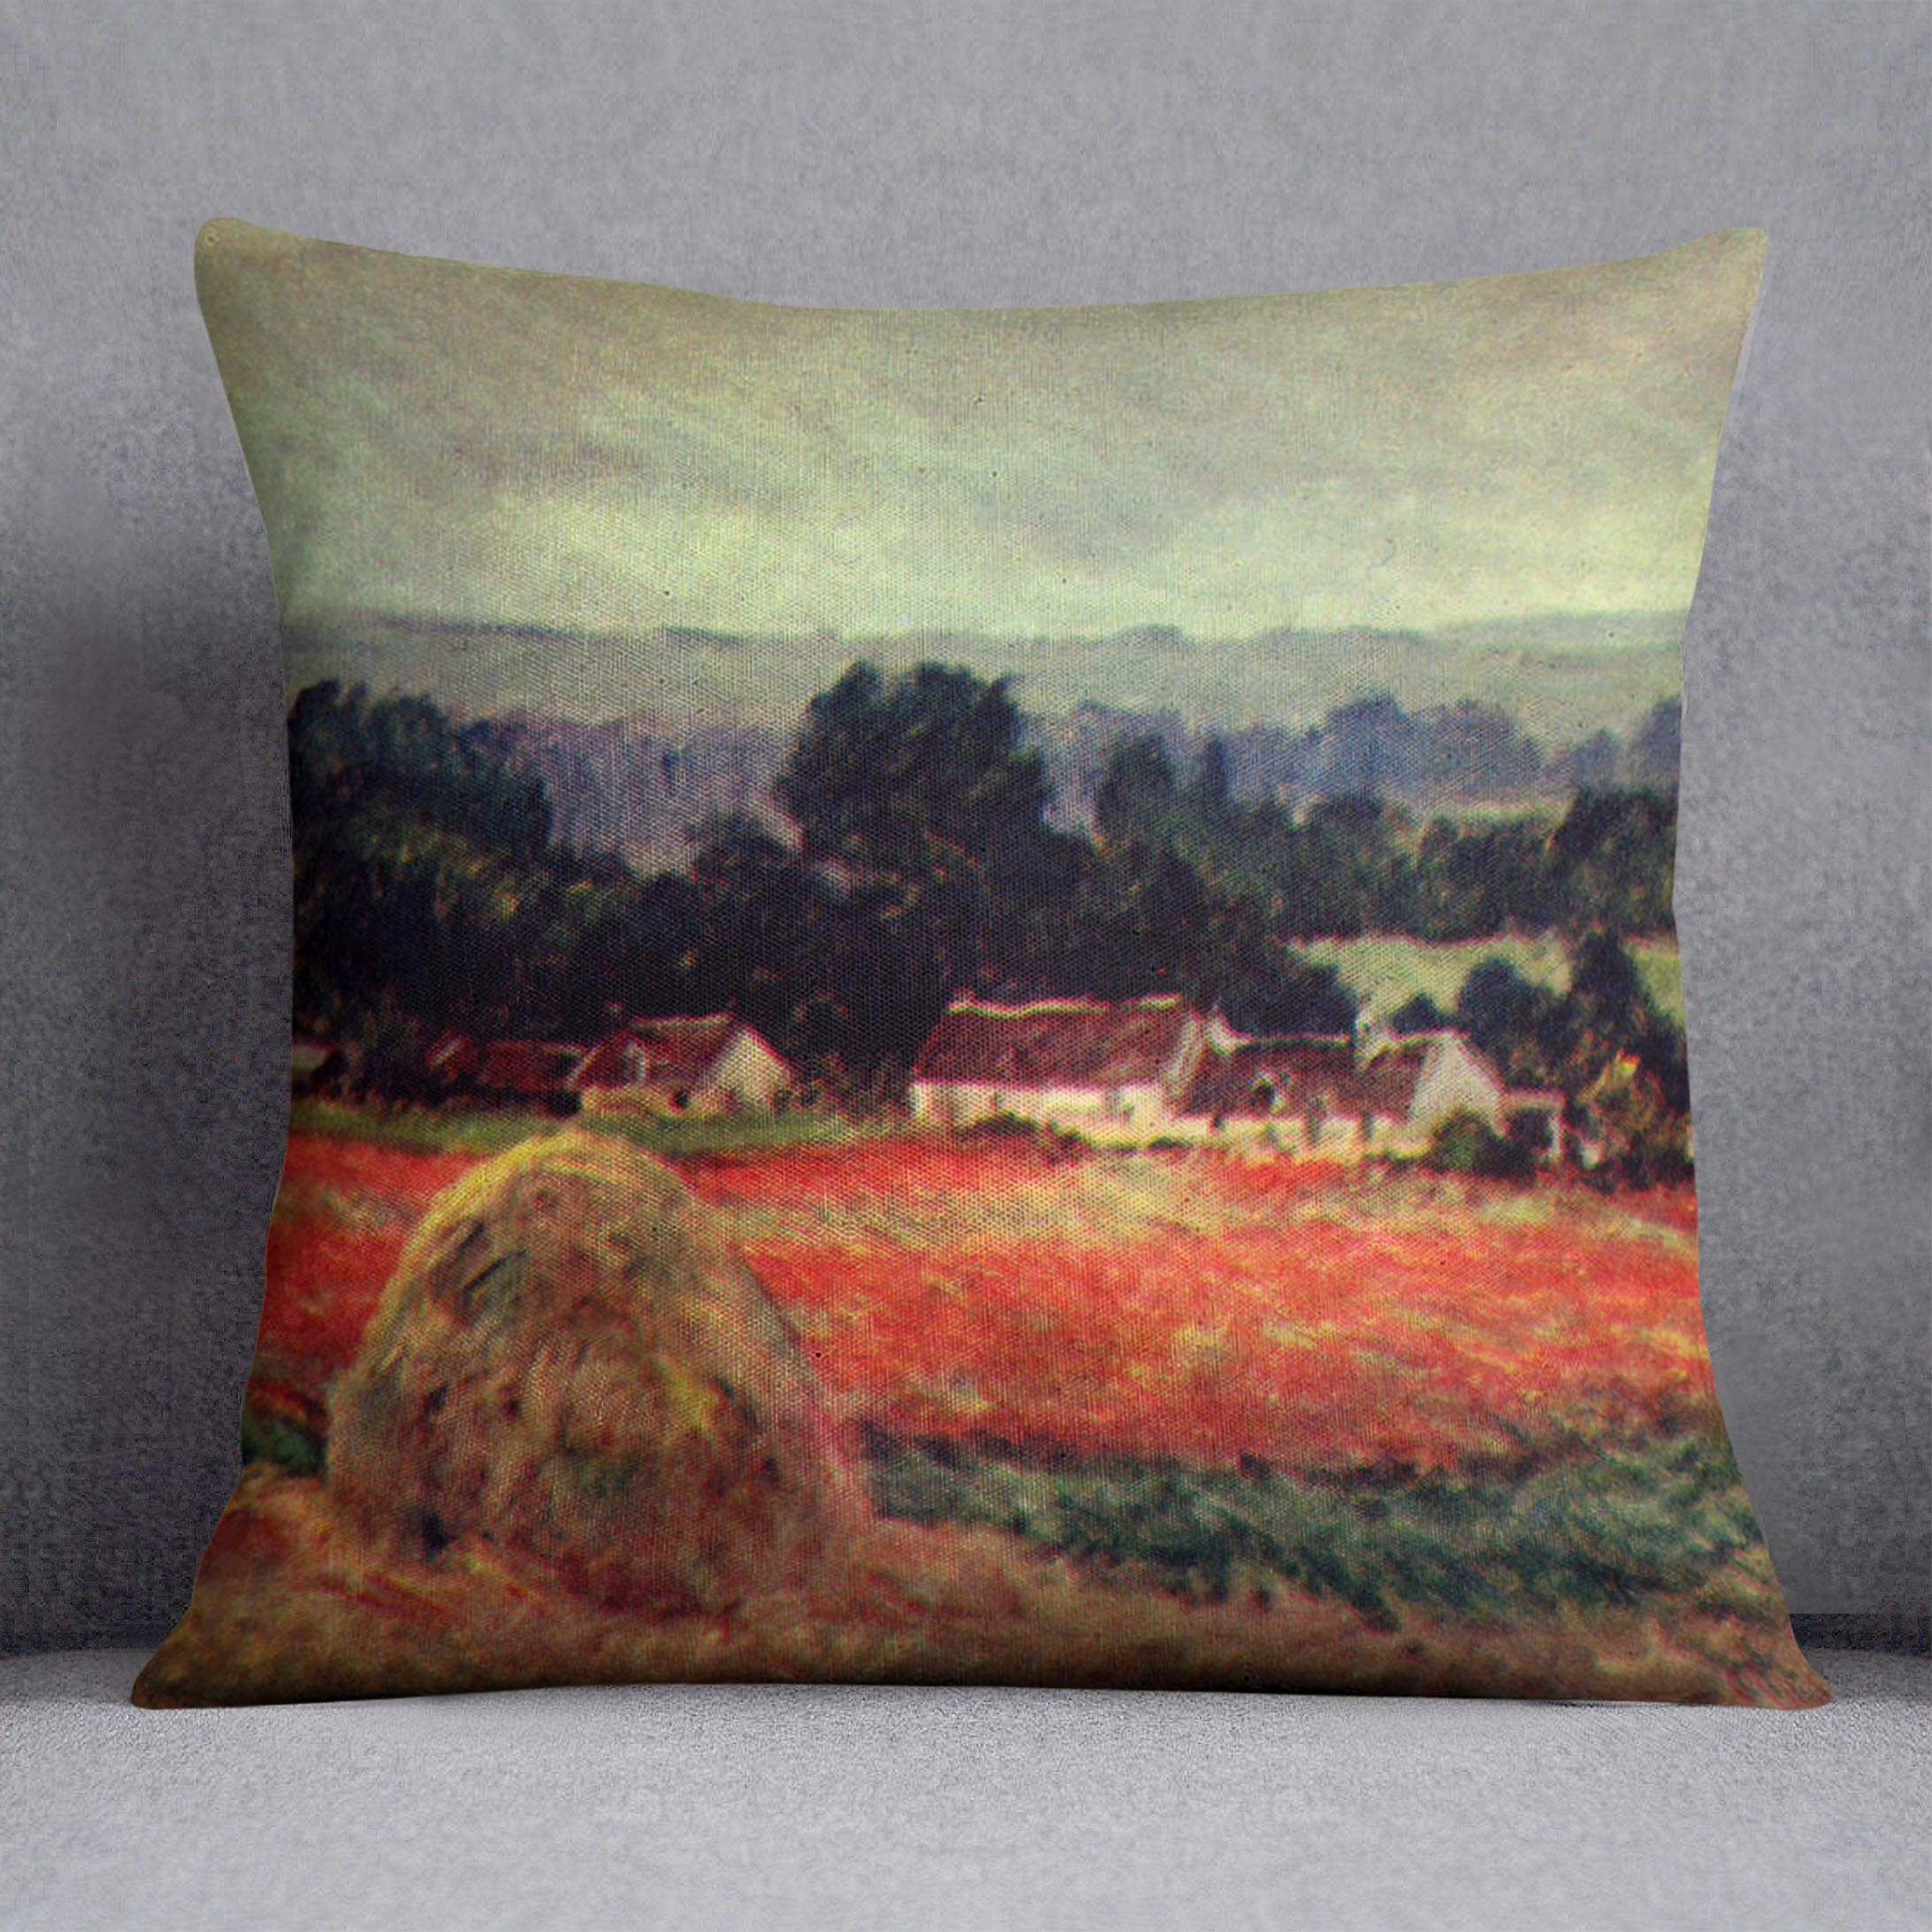 The poppy Blumenfeld The barn by Monet Cushion